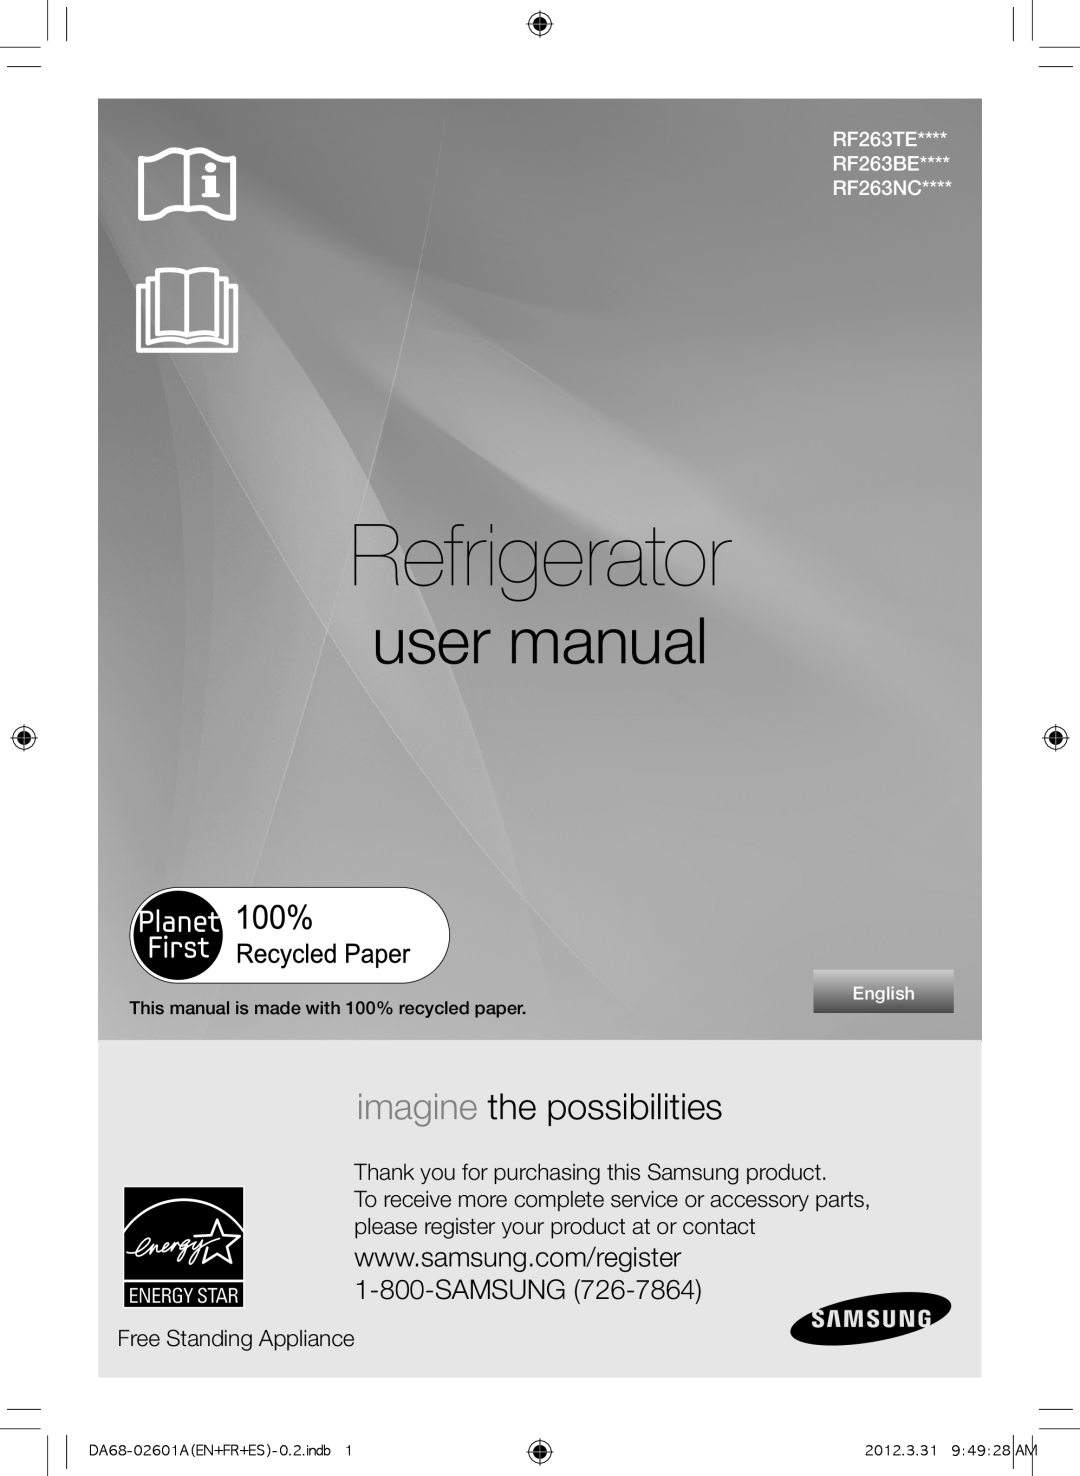 Samsung RF263BEAEBC user manual Refrigerator, imagine the possibilities, Samsung, Free Standing Appliance, English 